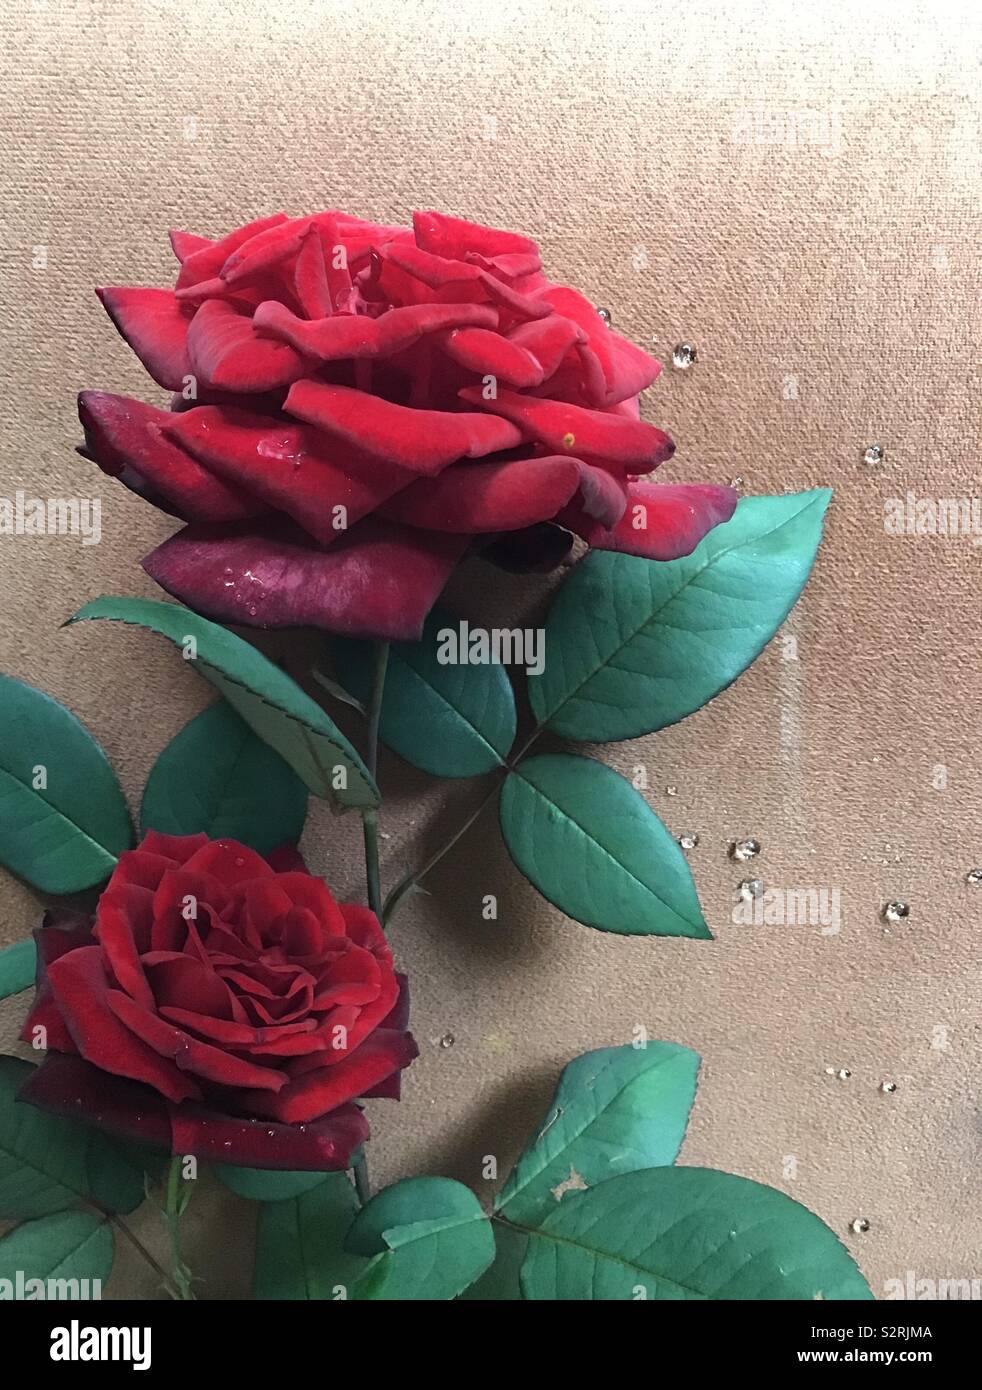 Ramo de rosas rojas Stock Photo - Alamy